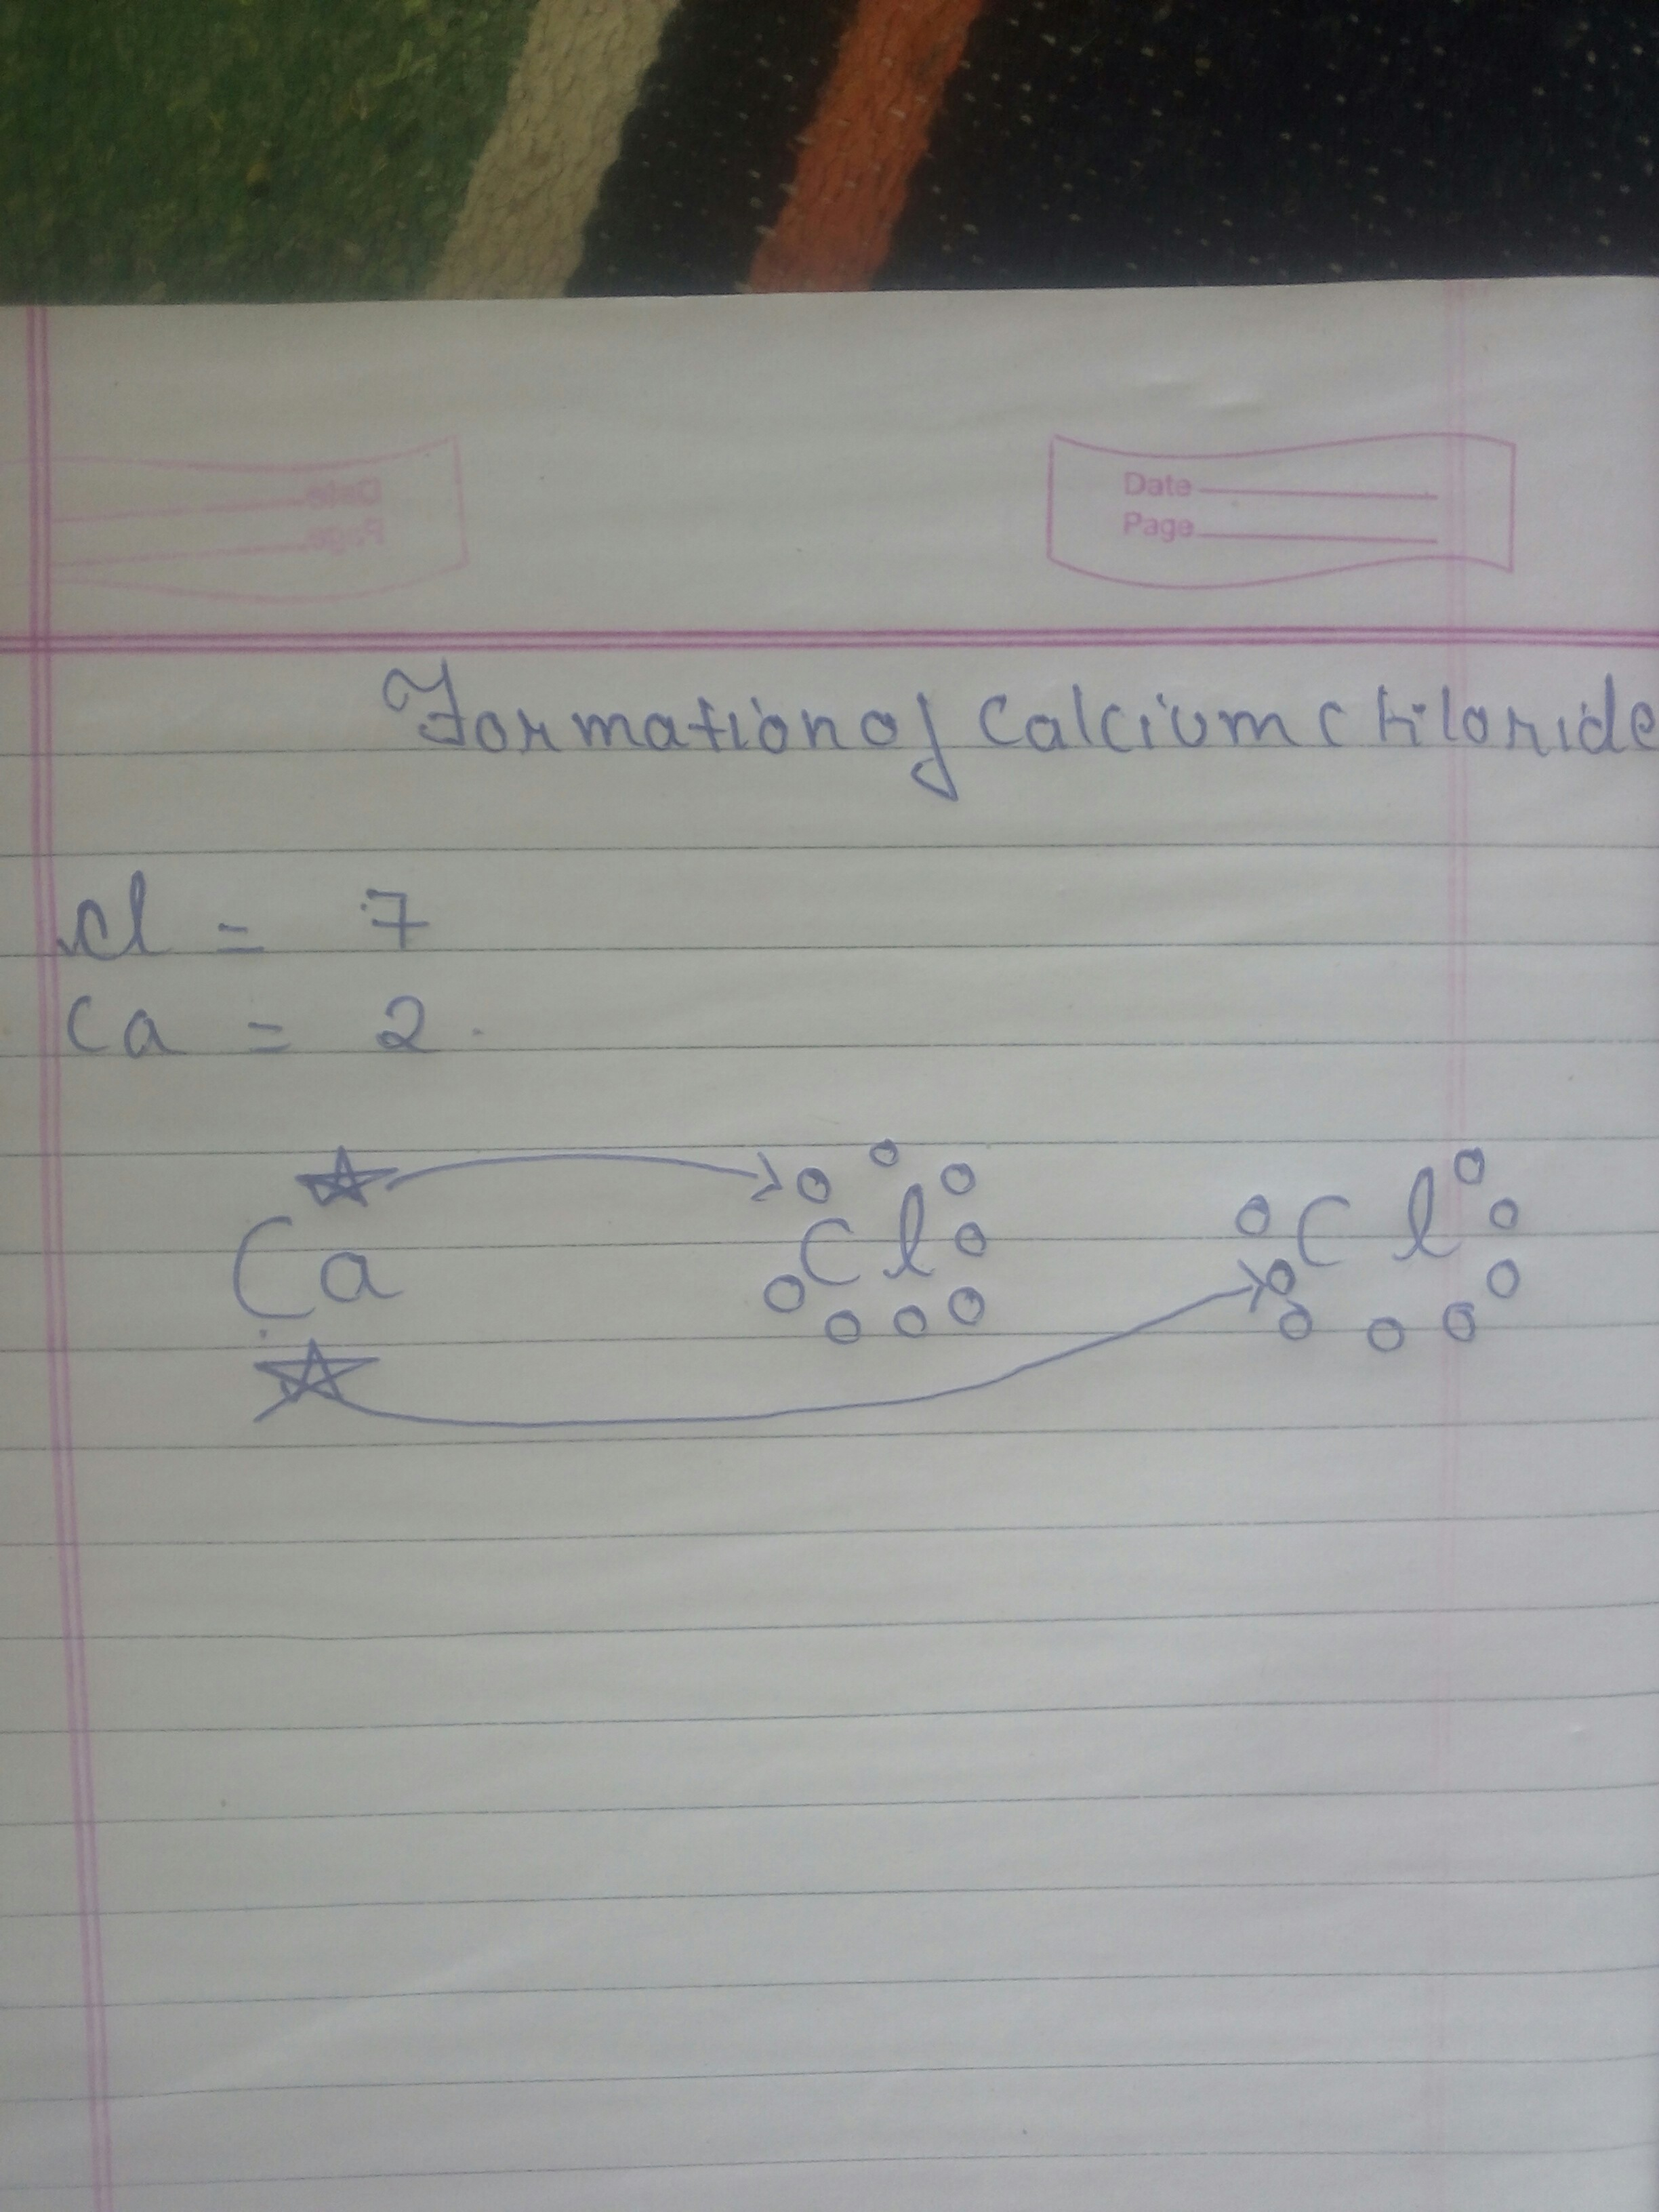 Electron Dot Diagram For Chlorine Write Electron Dot Diagram For Chlorine And Calcium Show The